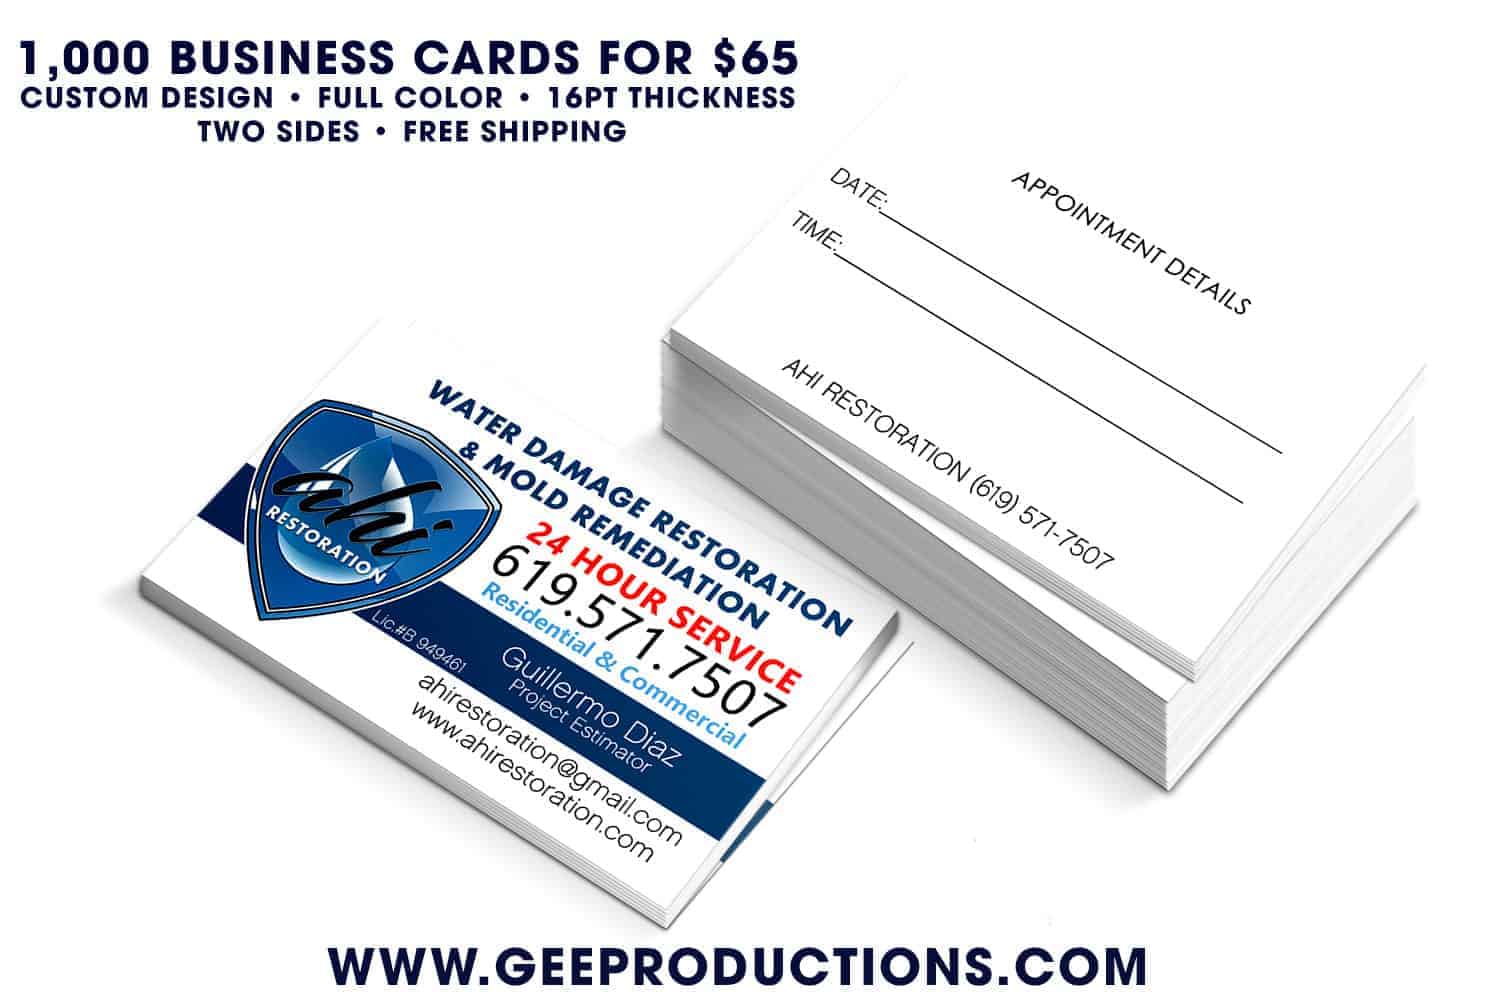 restoration business cards 2